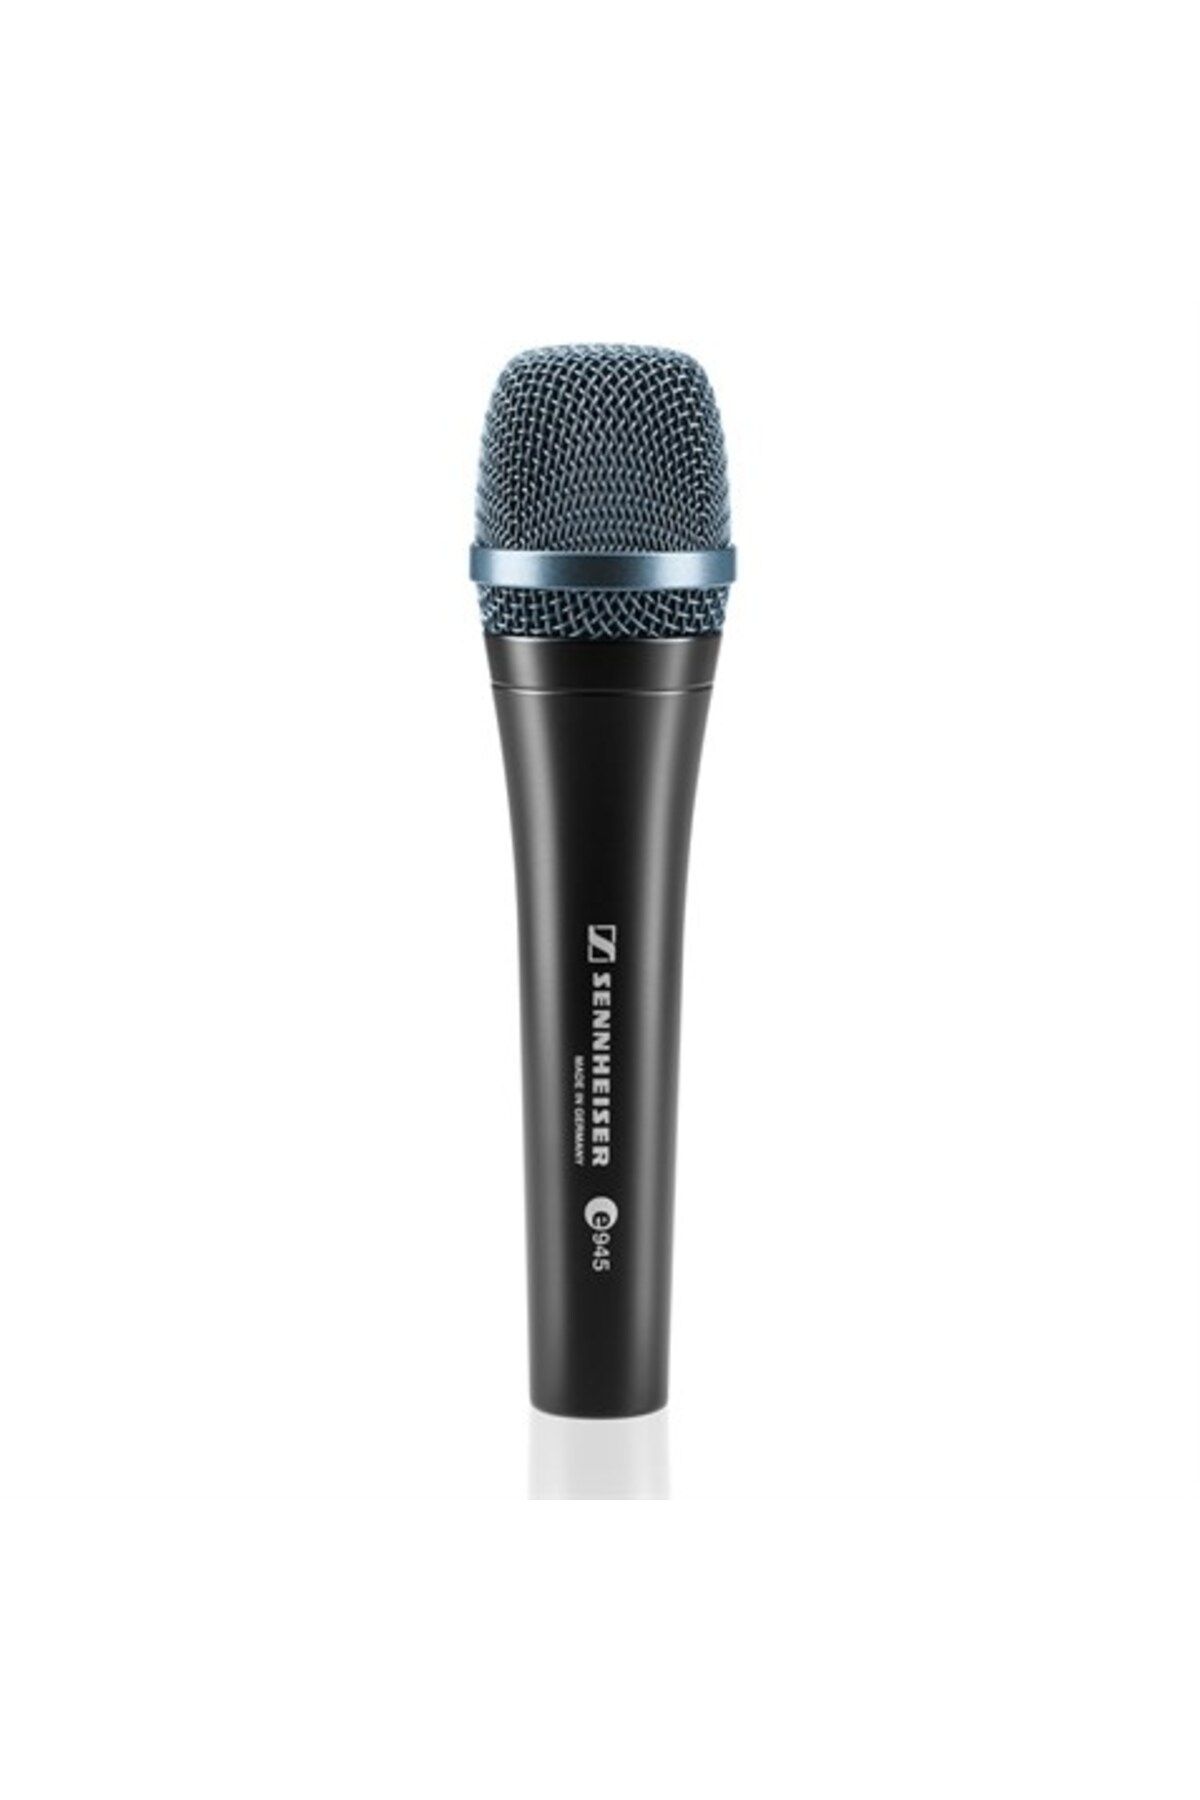 Sennheiser E 945 Dinamik Süper-Kardioid Vokal Mikrofonu